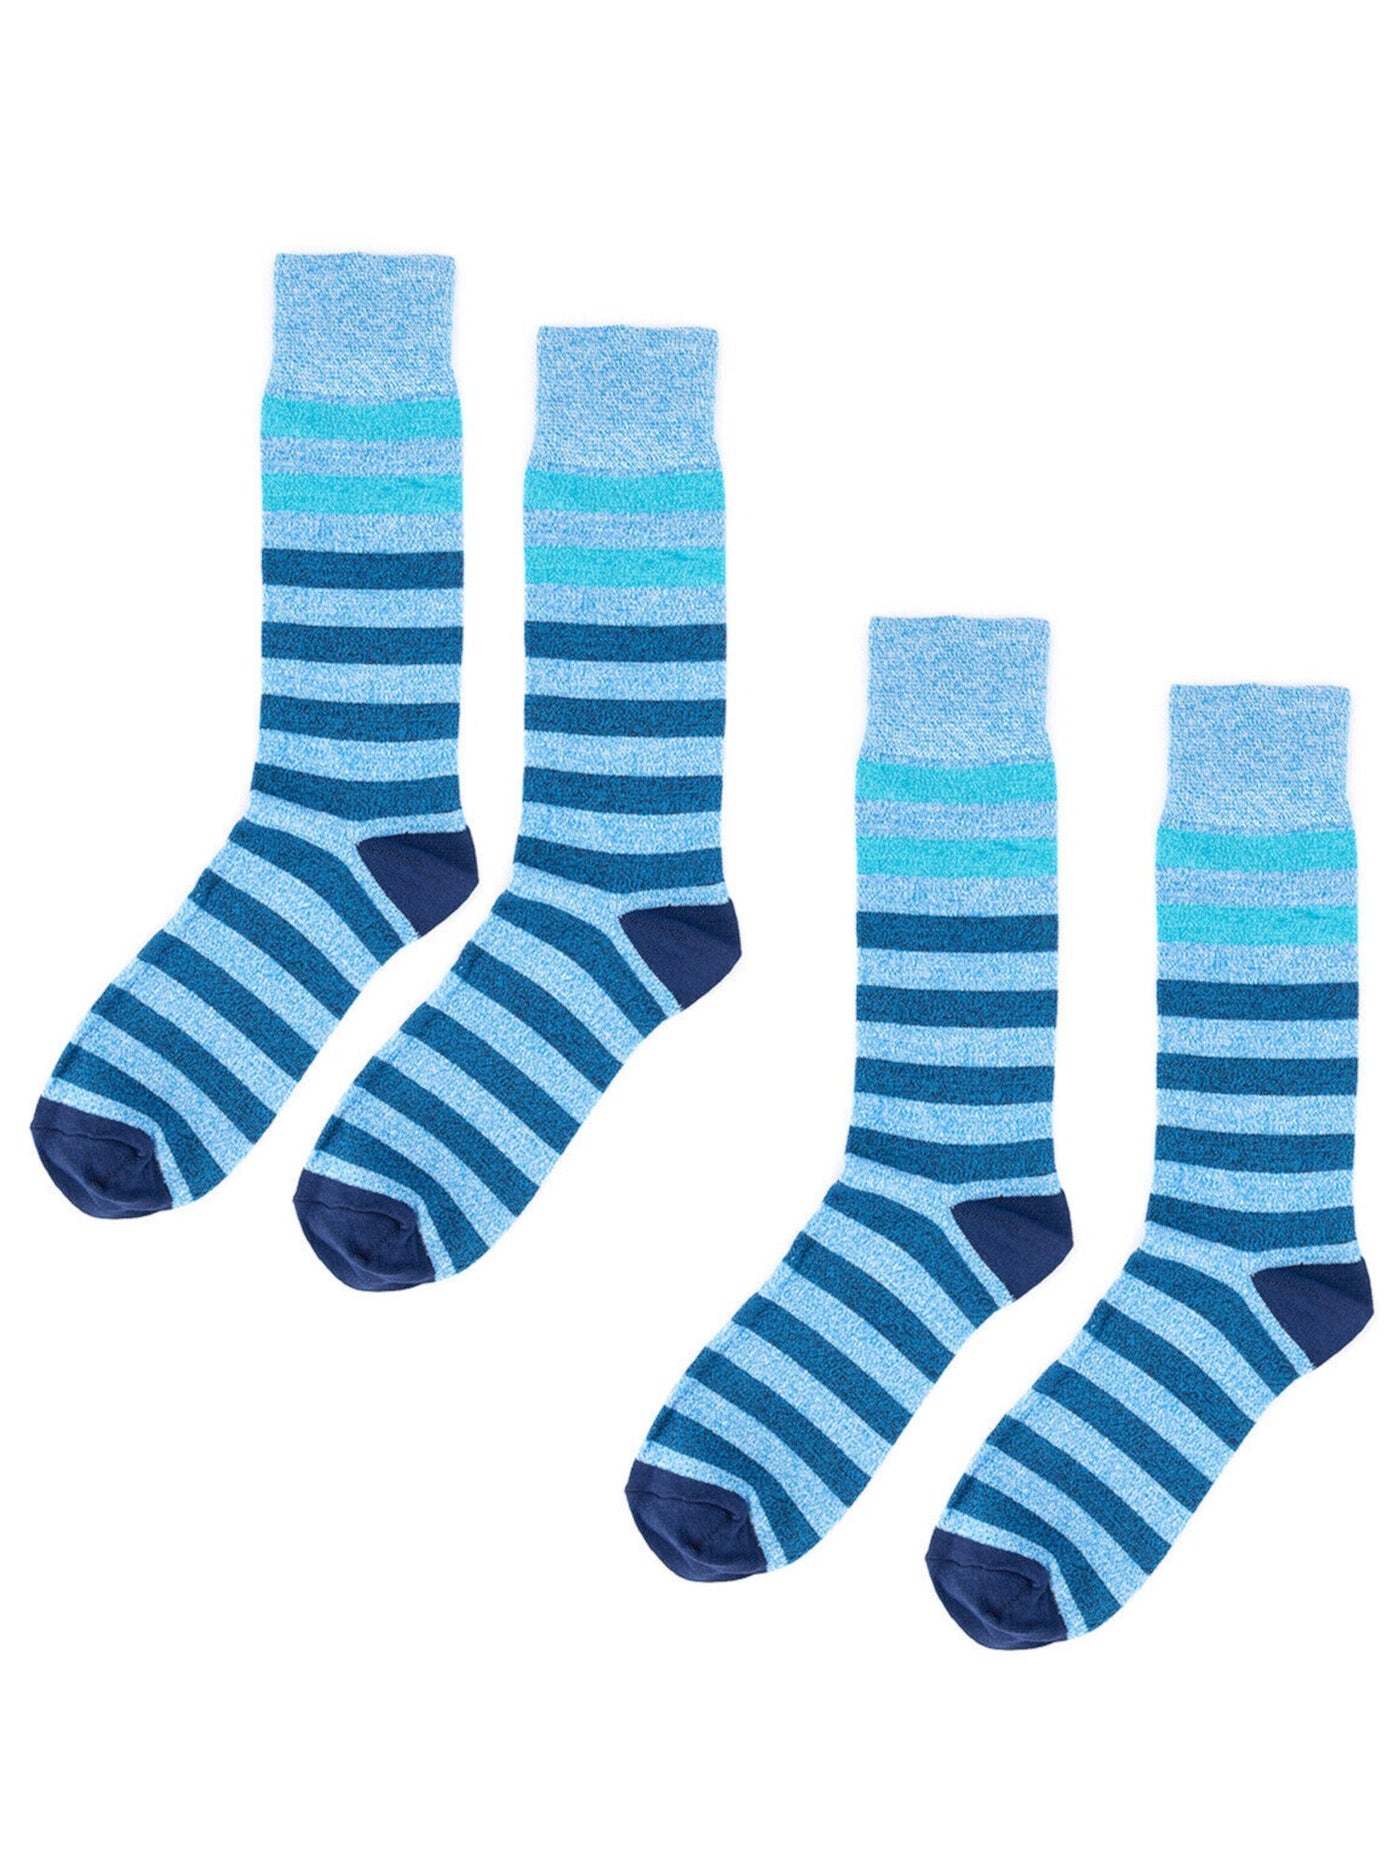 PERRY ELLIS Light Blue Striped Dress Crew Socks 7-12